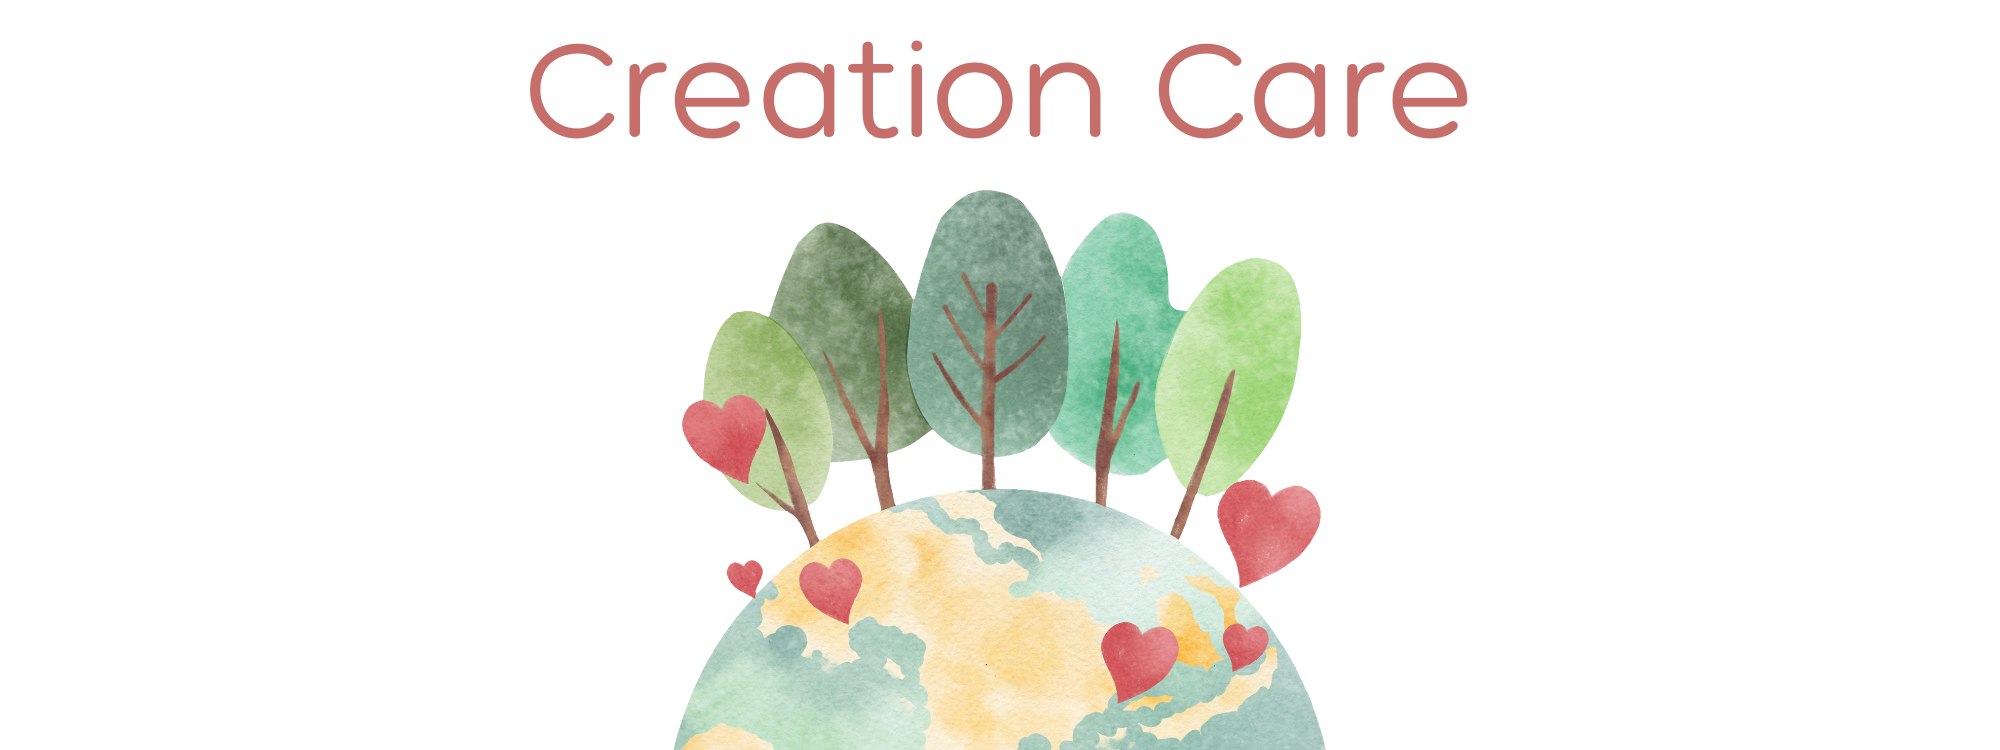 Creation Care WEB BANNER (1)